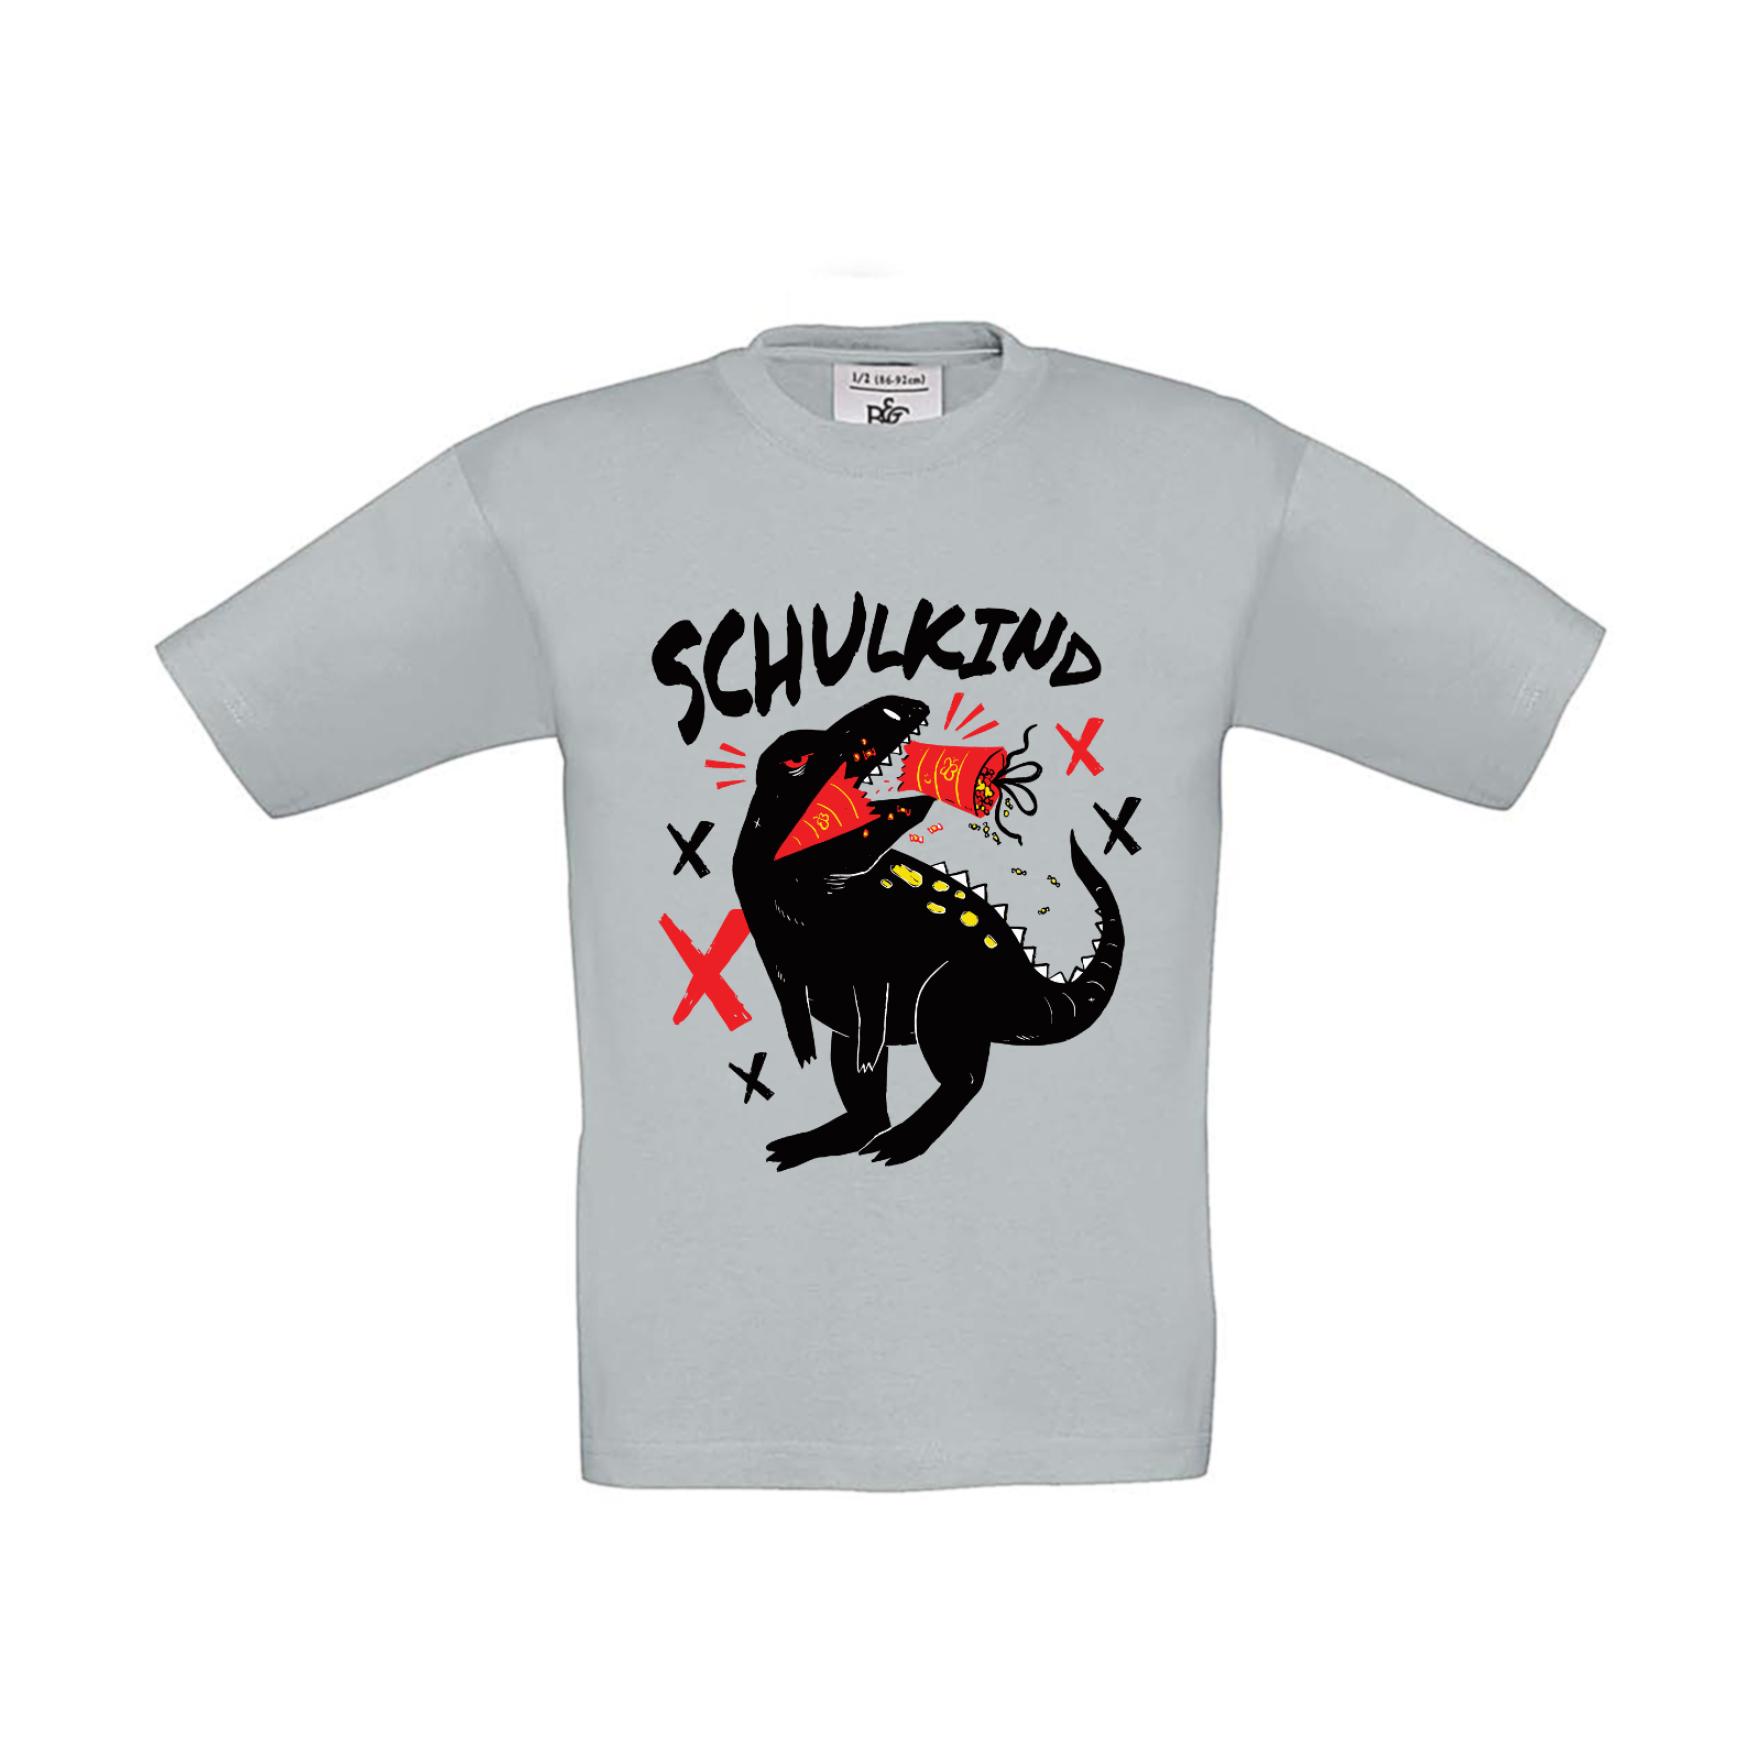 T-Shirt Kinder Schule - Schulstart Schulkind T-Rex